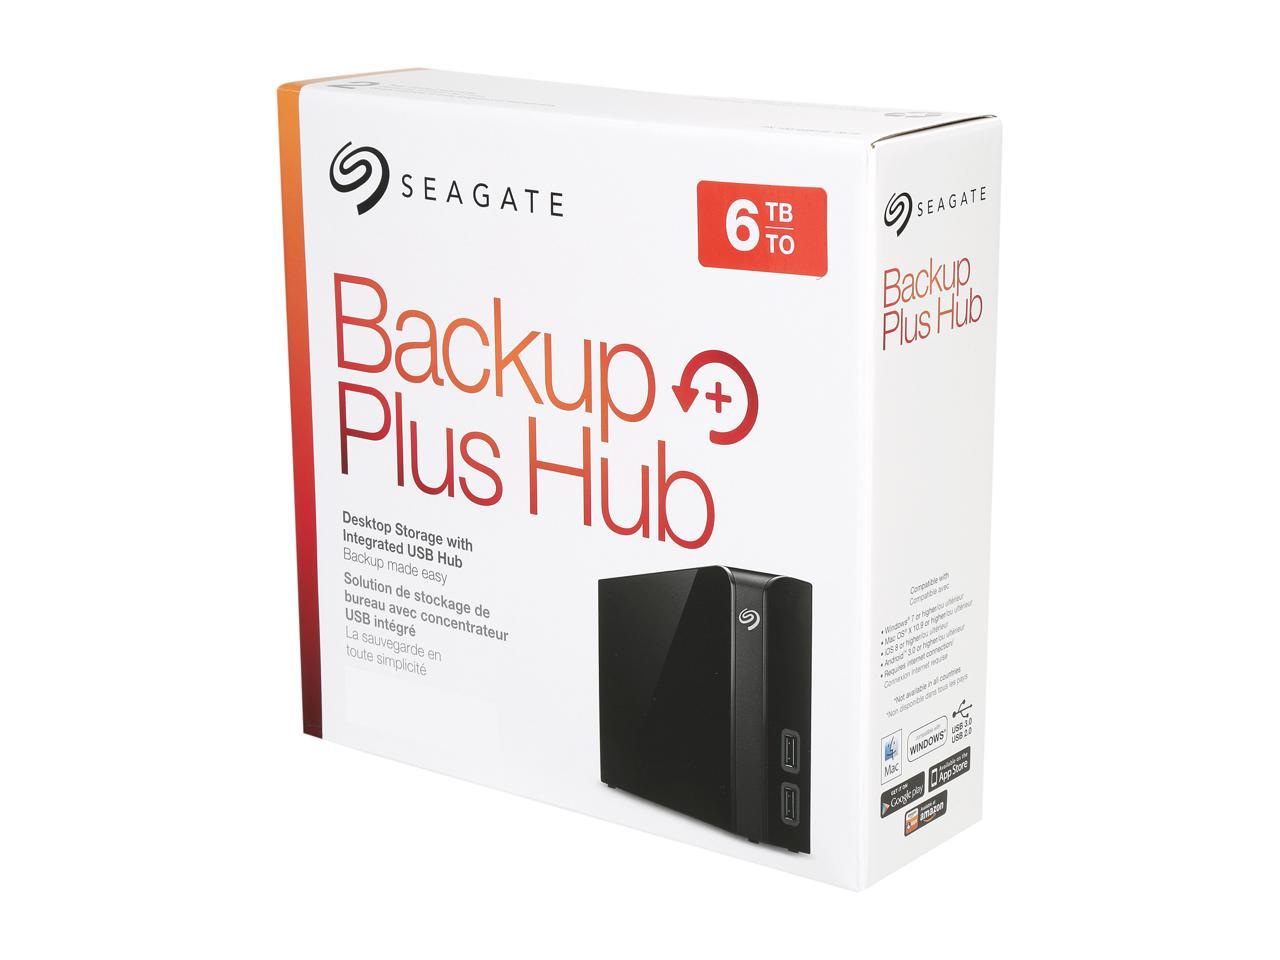 Seagate Backup Plus Hub 6TB 2 x USB 3.0 Hard Drives ...